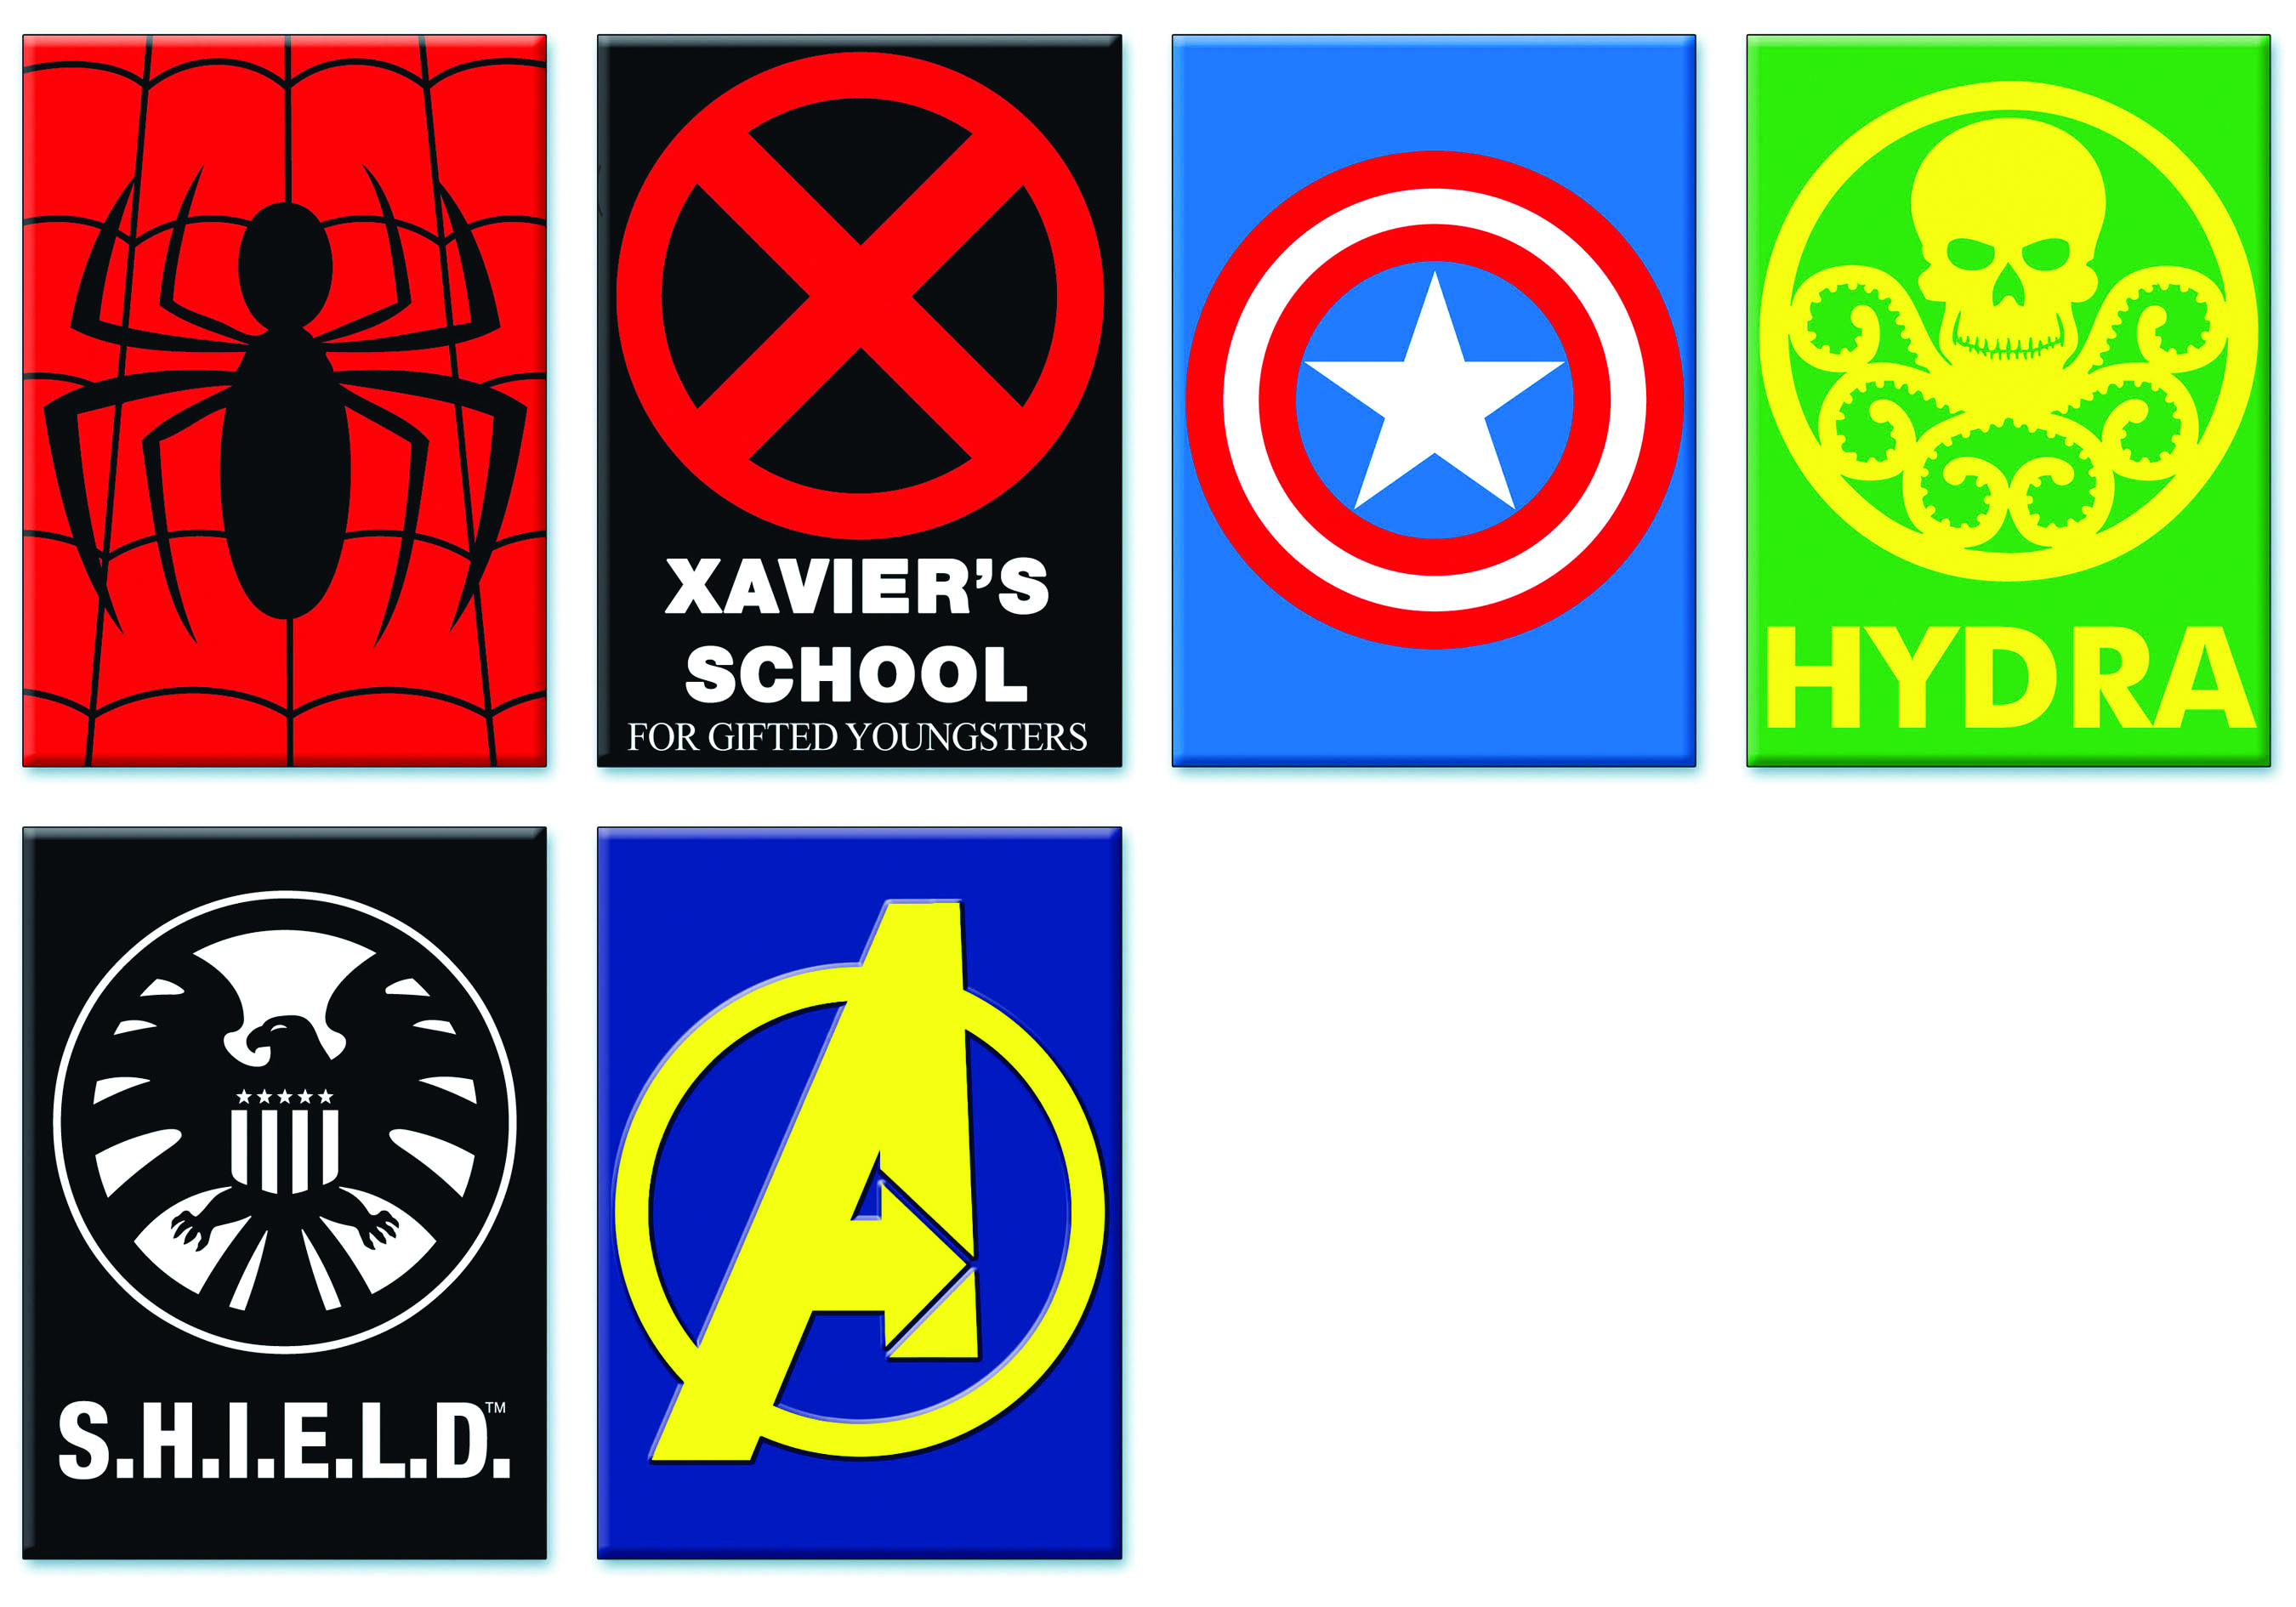 avengers hero logos